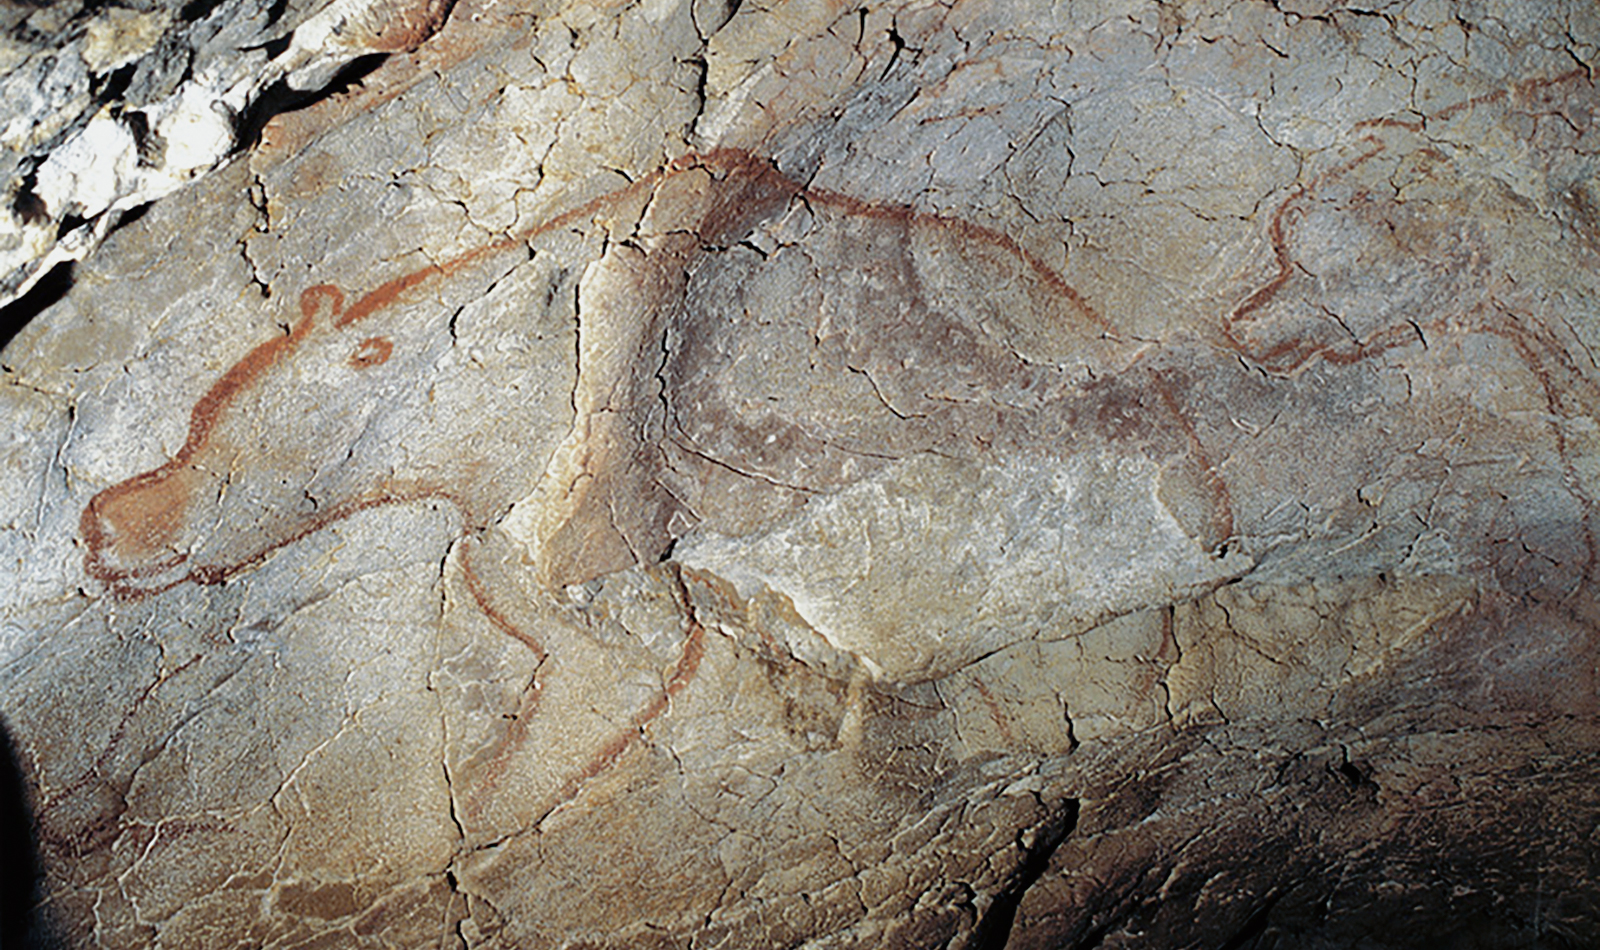 Chauvet Cave Art Painting Bears